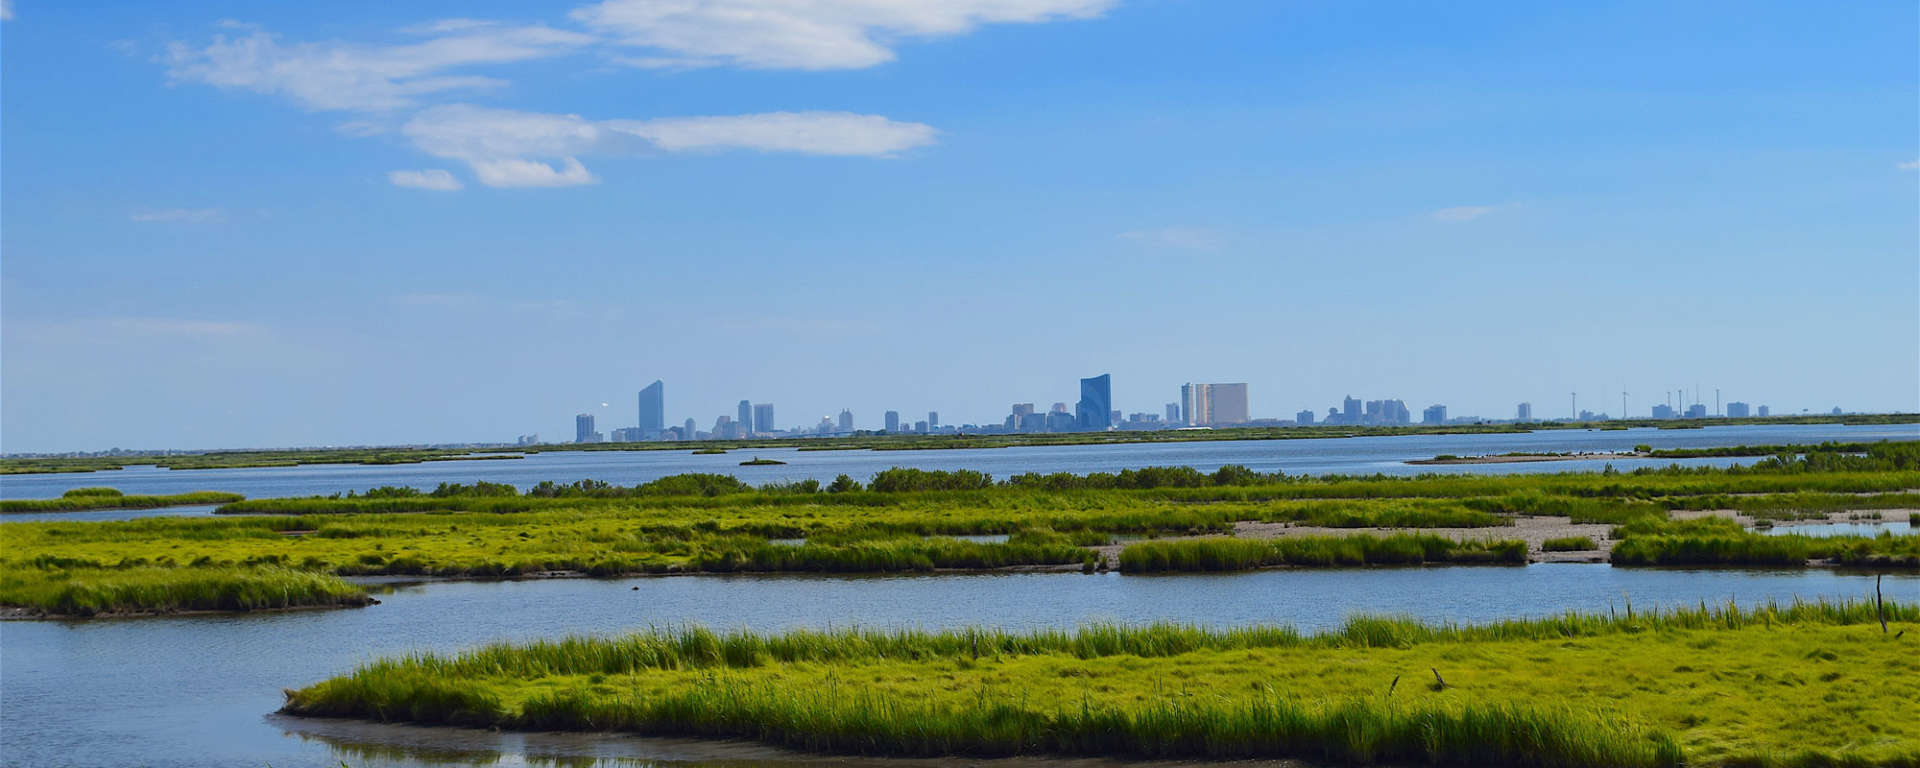 Marshlands for Restore the Delta